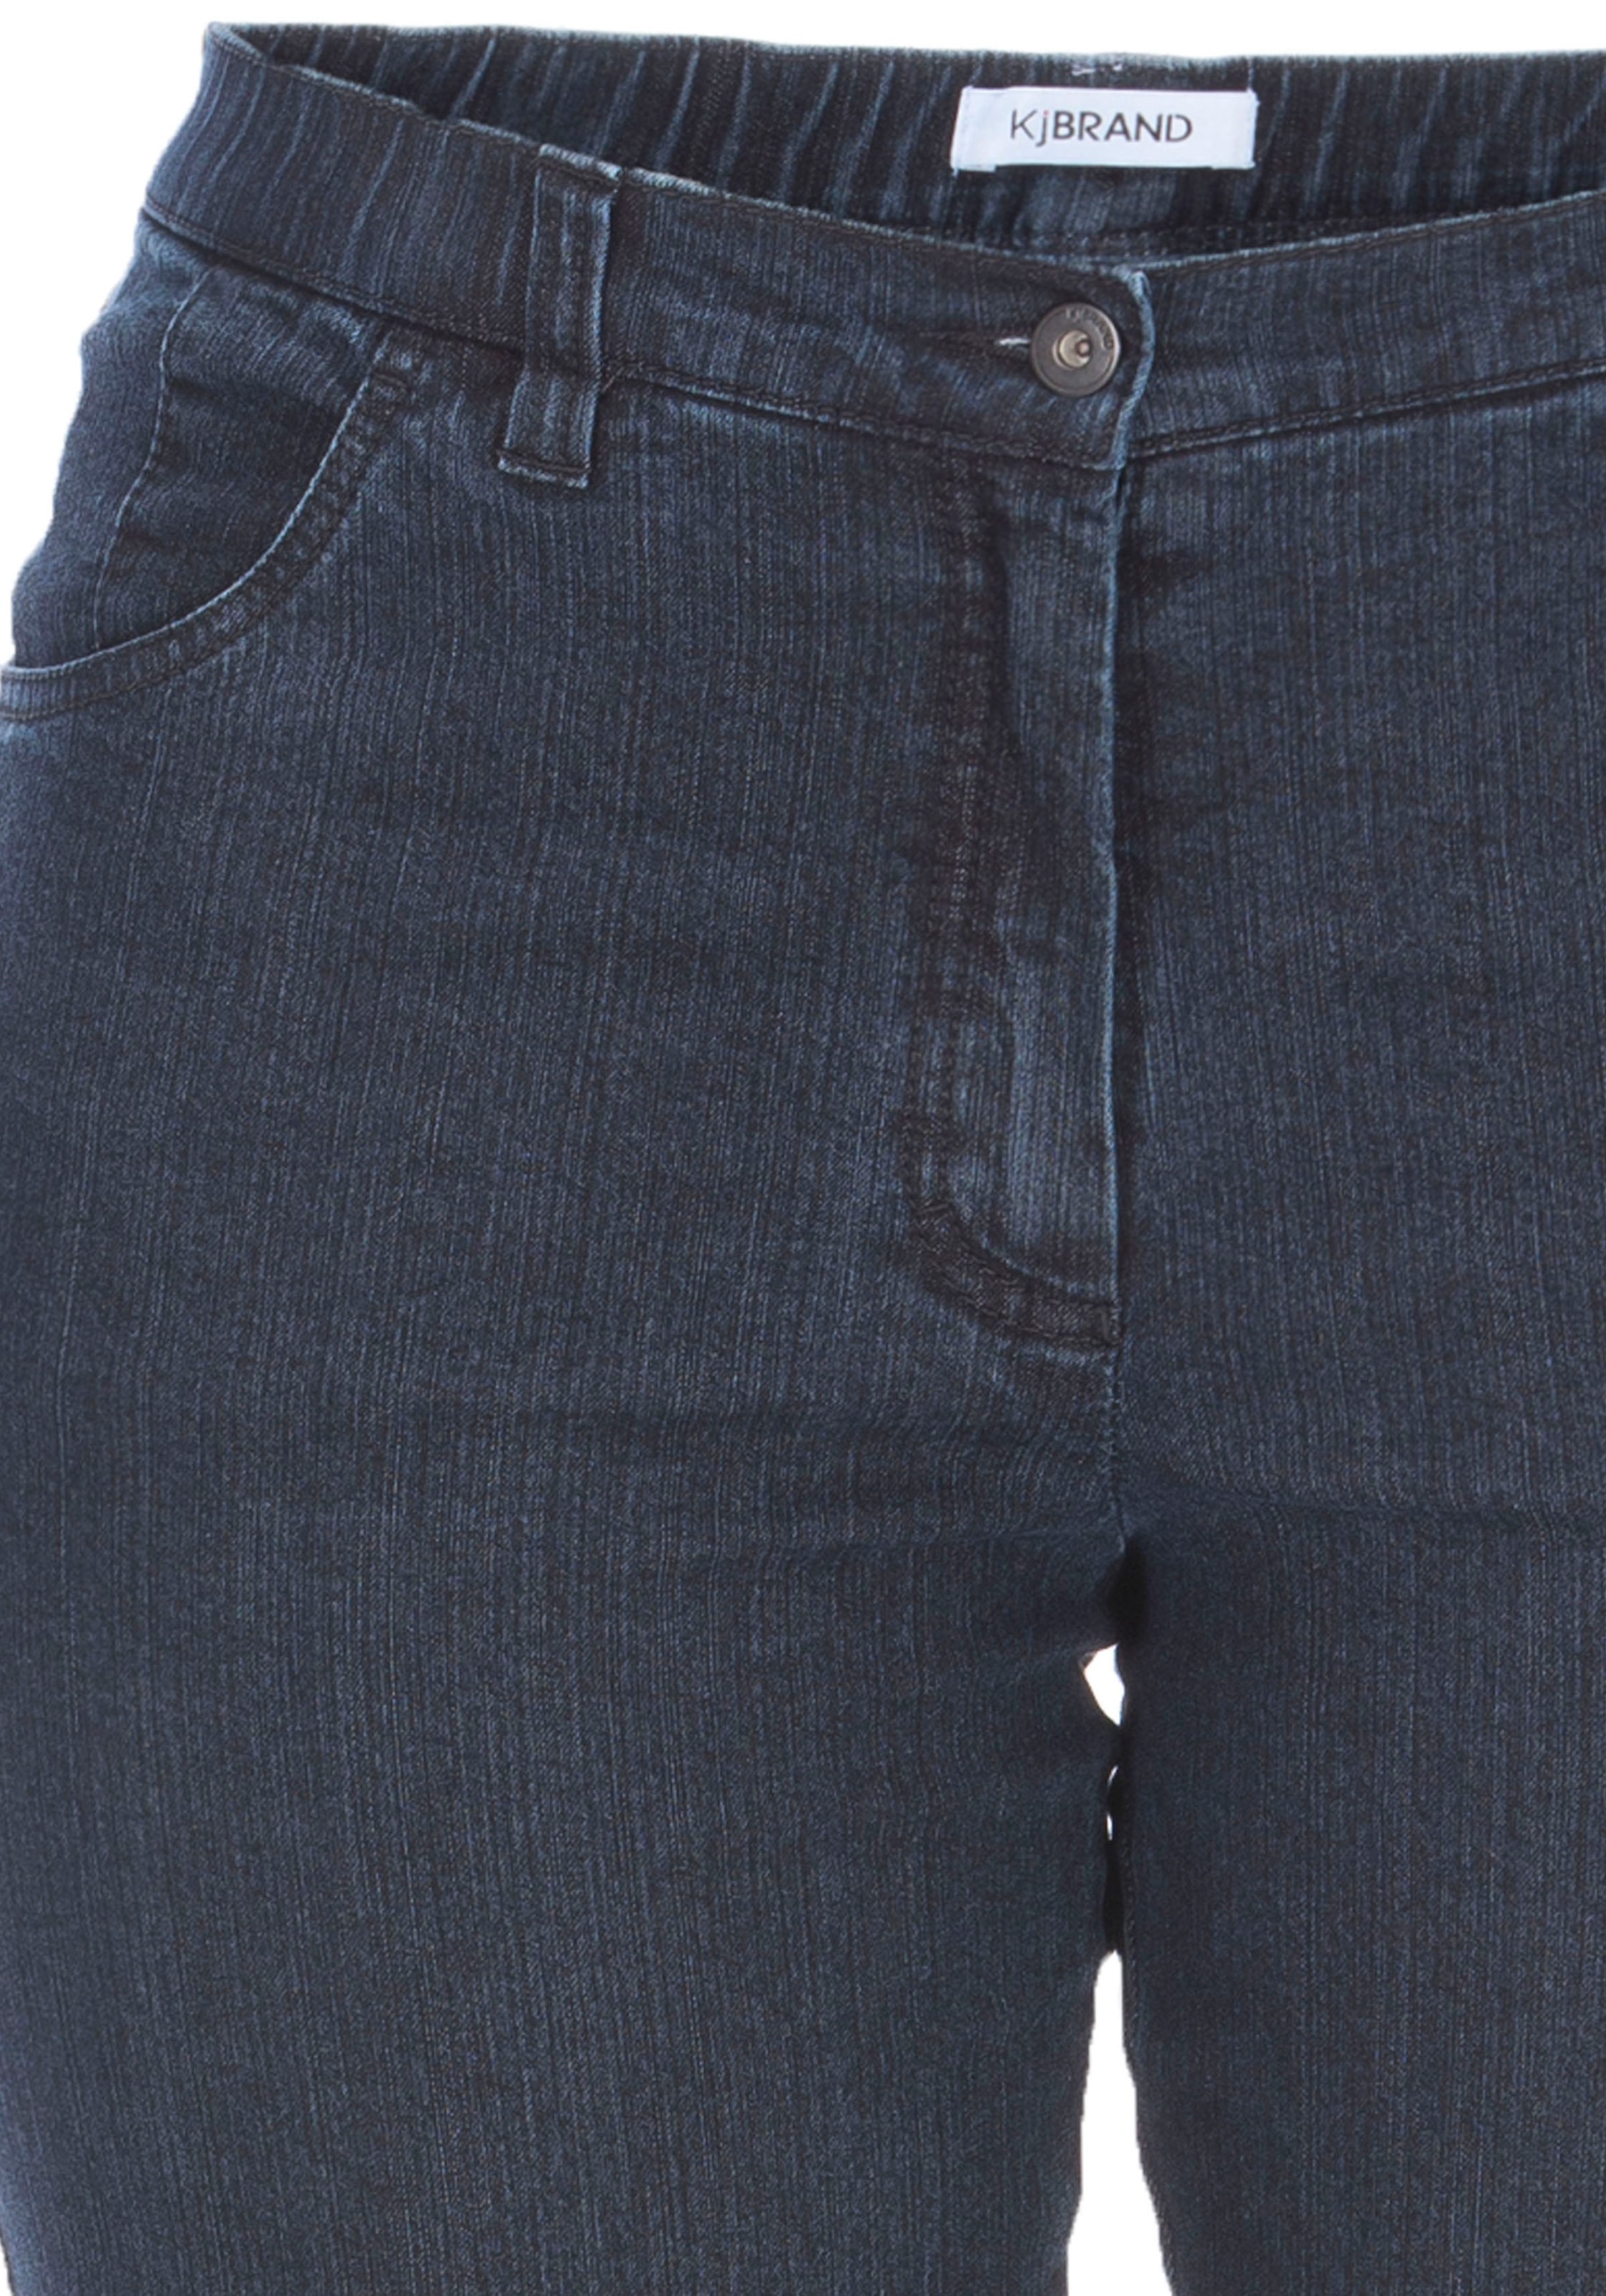 Shop Online Stretch-Jeans im Denim OTTO KjBRAND Stretch« »Betty